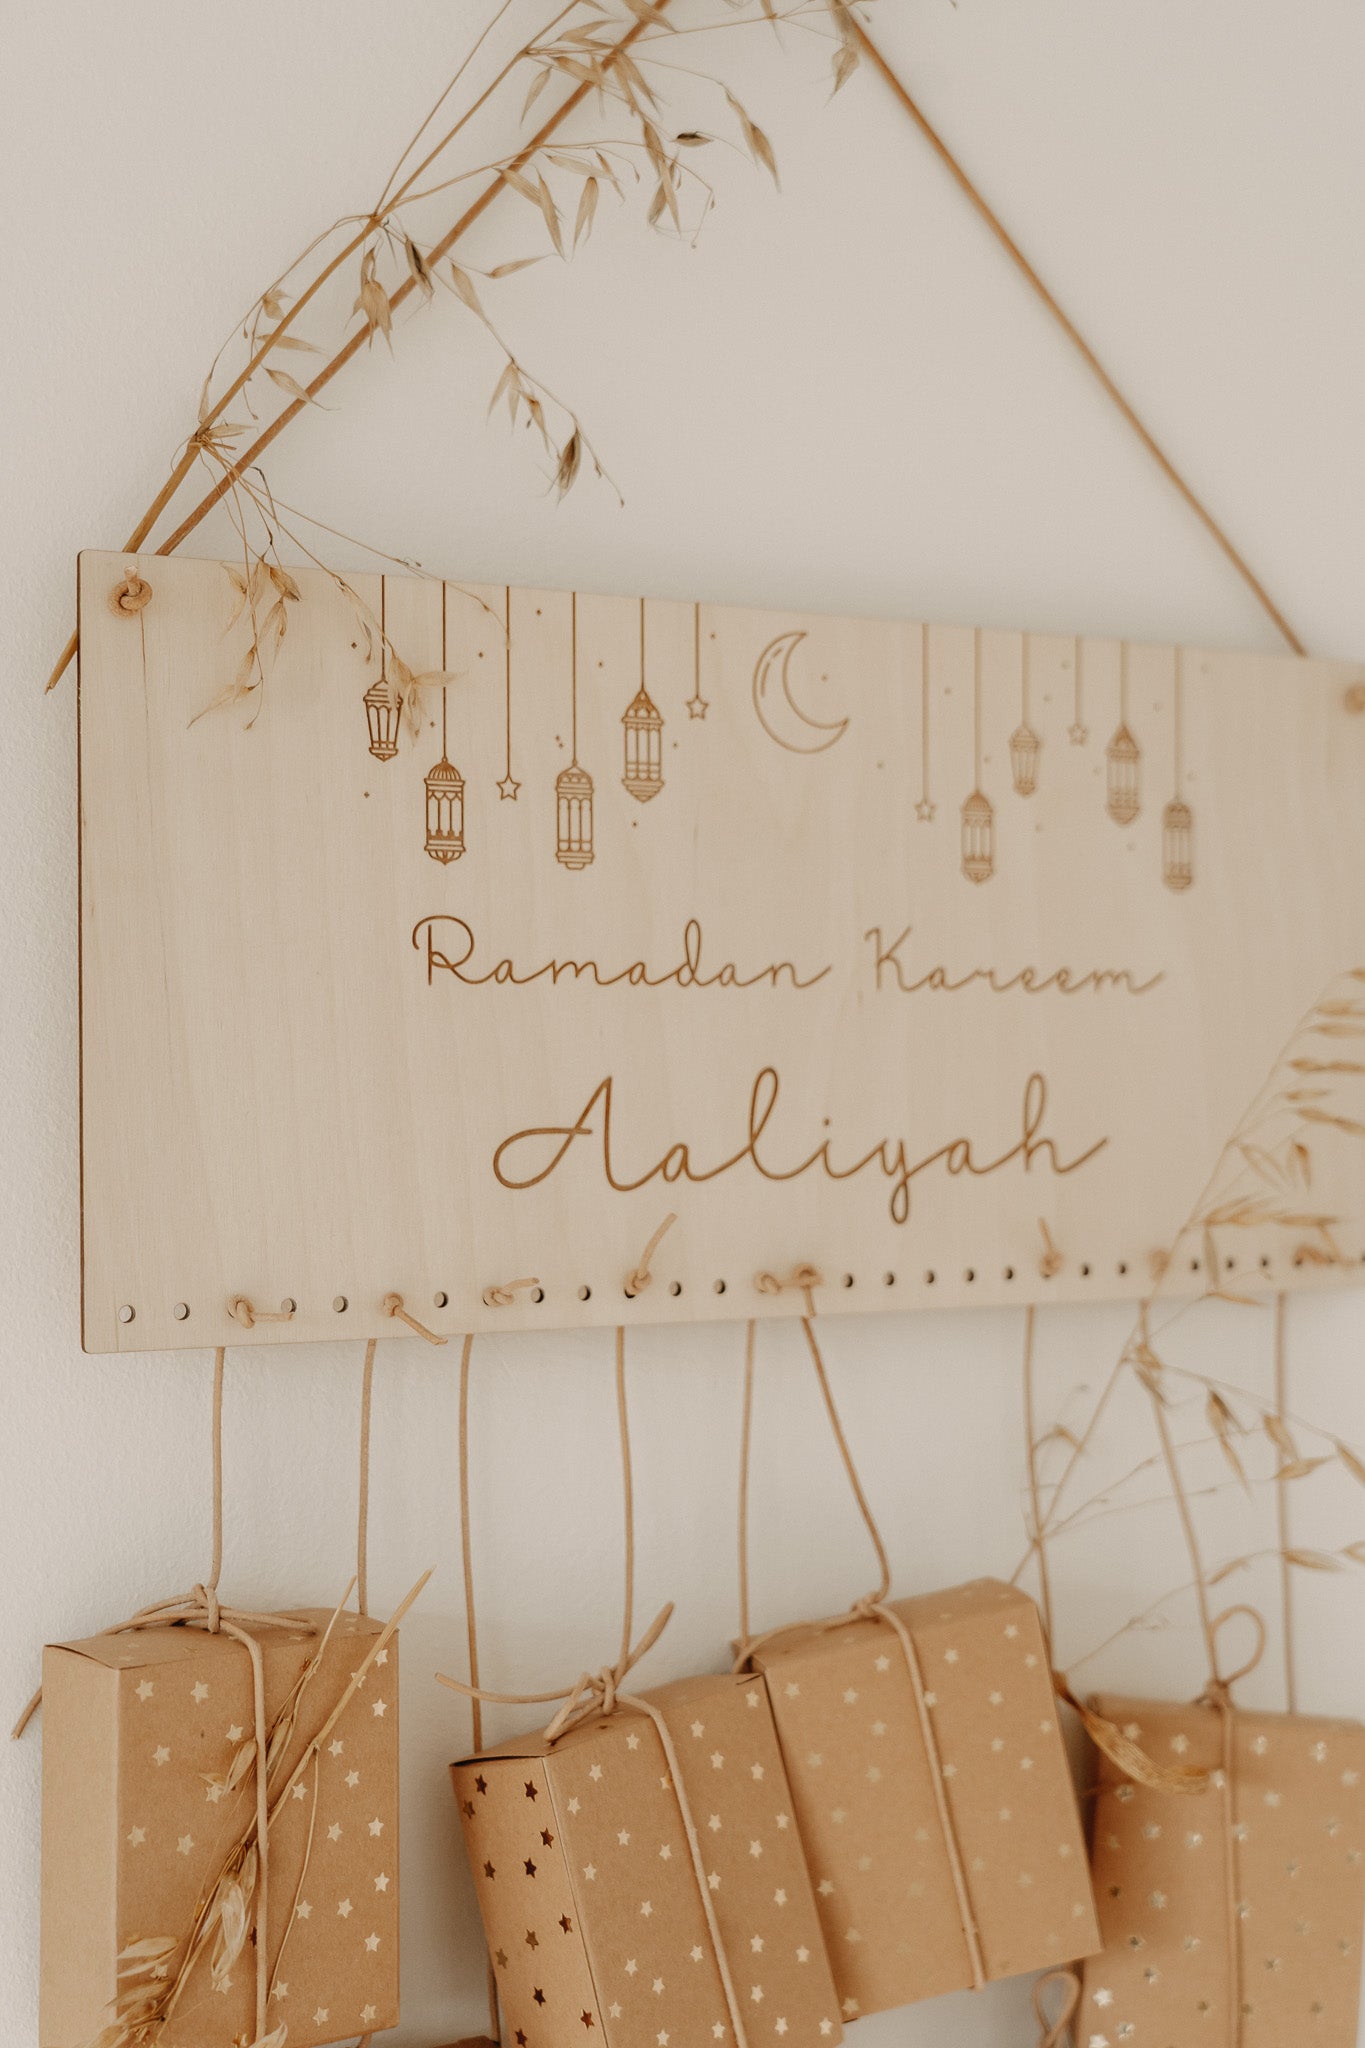 Ramadan-Kalender mit Laternen